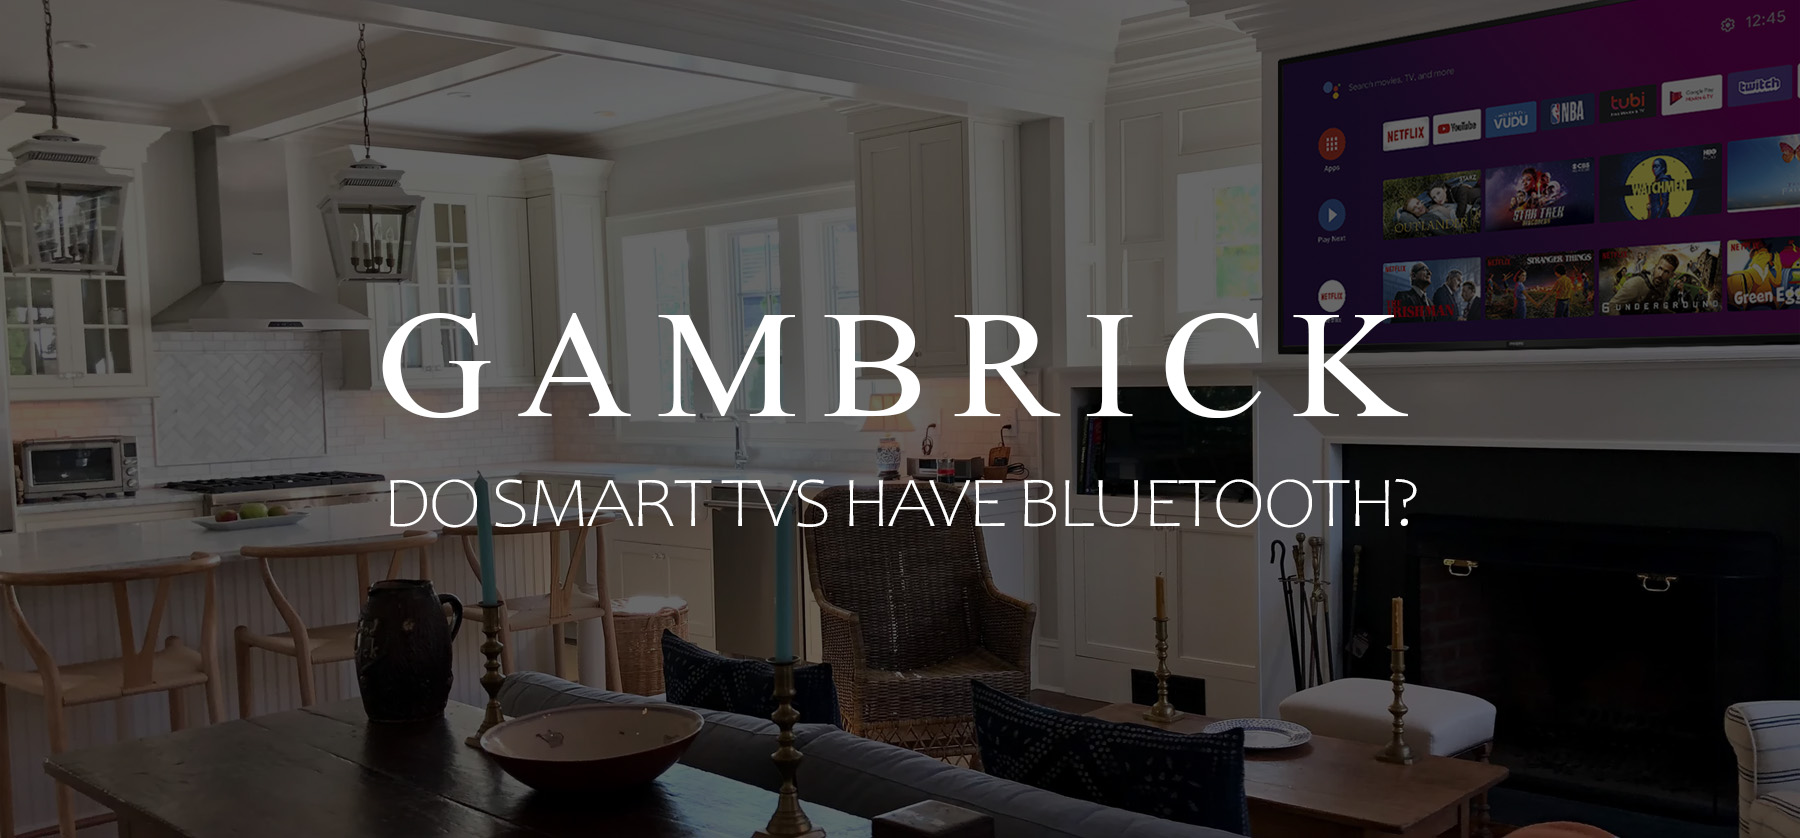 Do Smart TVs have Bluetooth banner 1.0